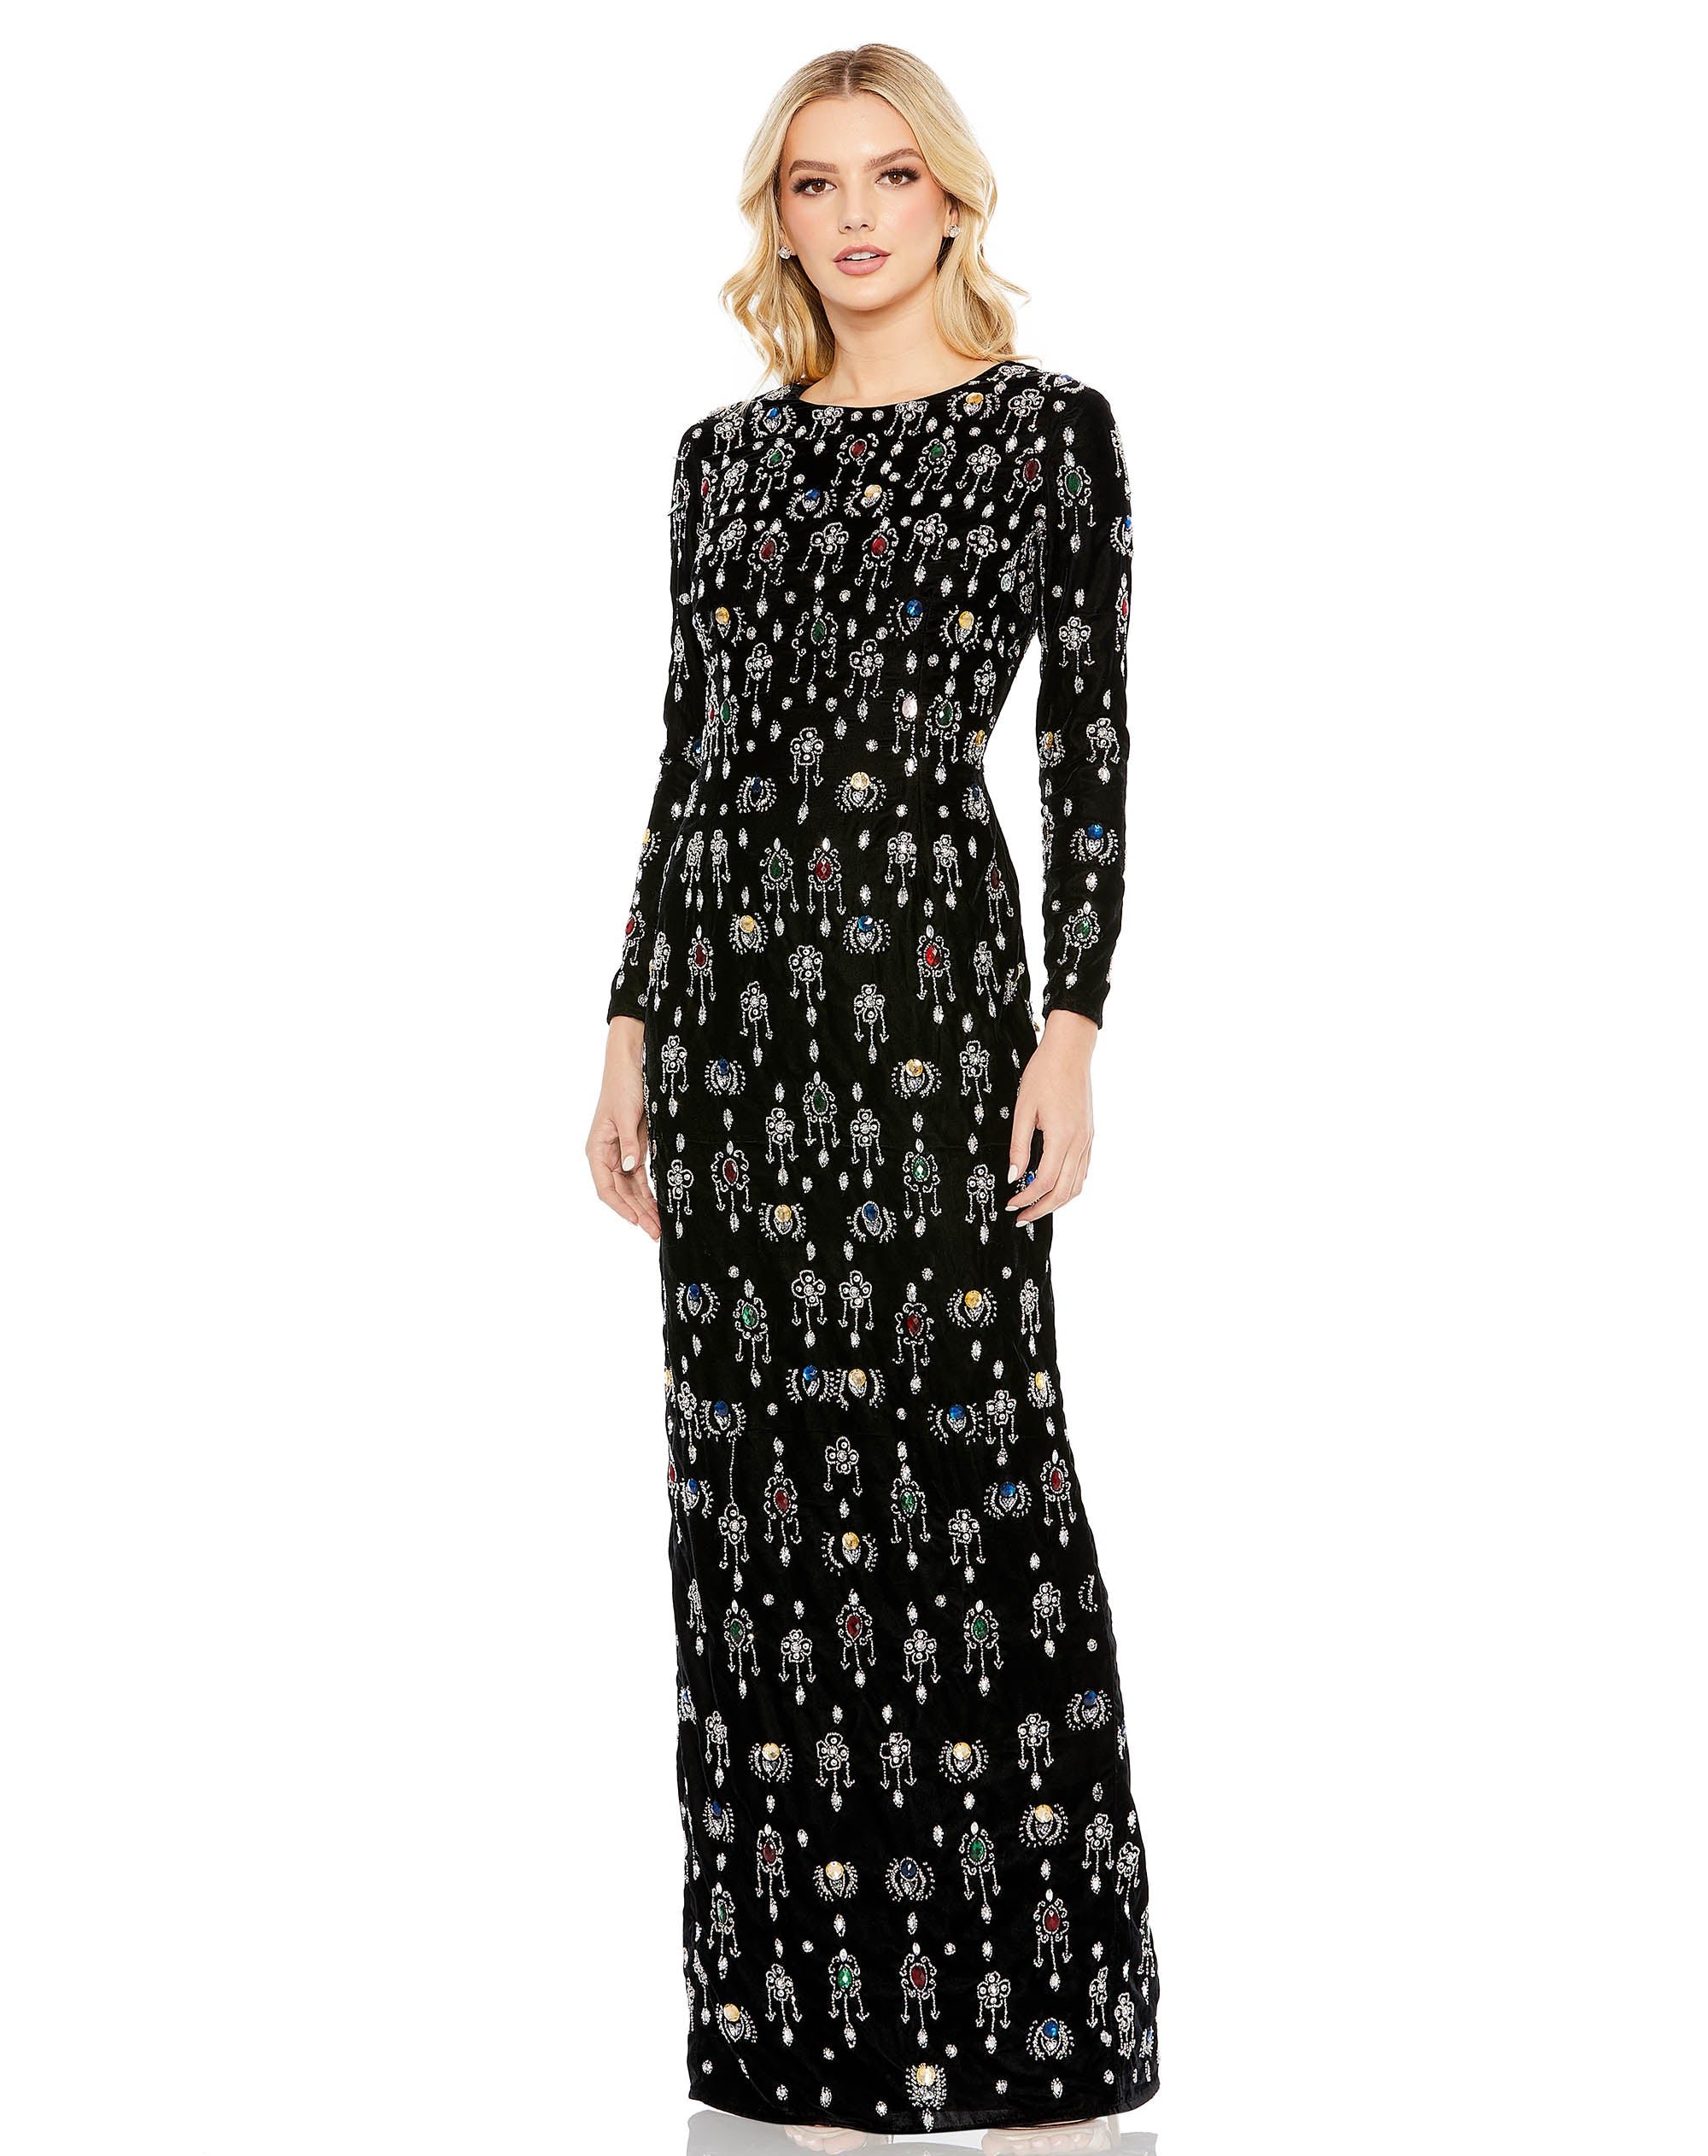 Gem Embellished Velvet Long Sleeve Column Dress | Sample | Sz. 2